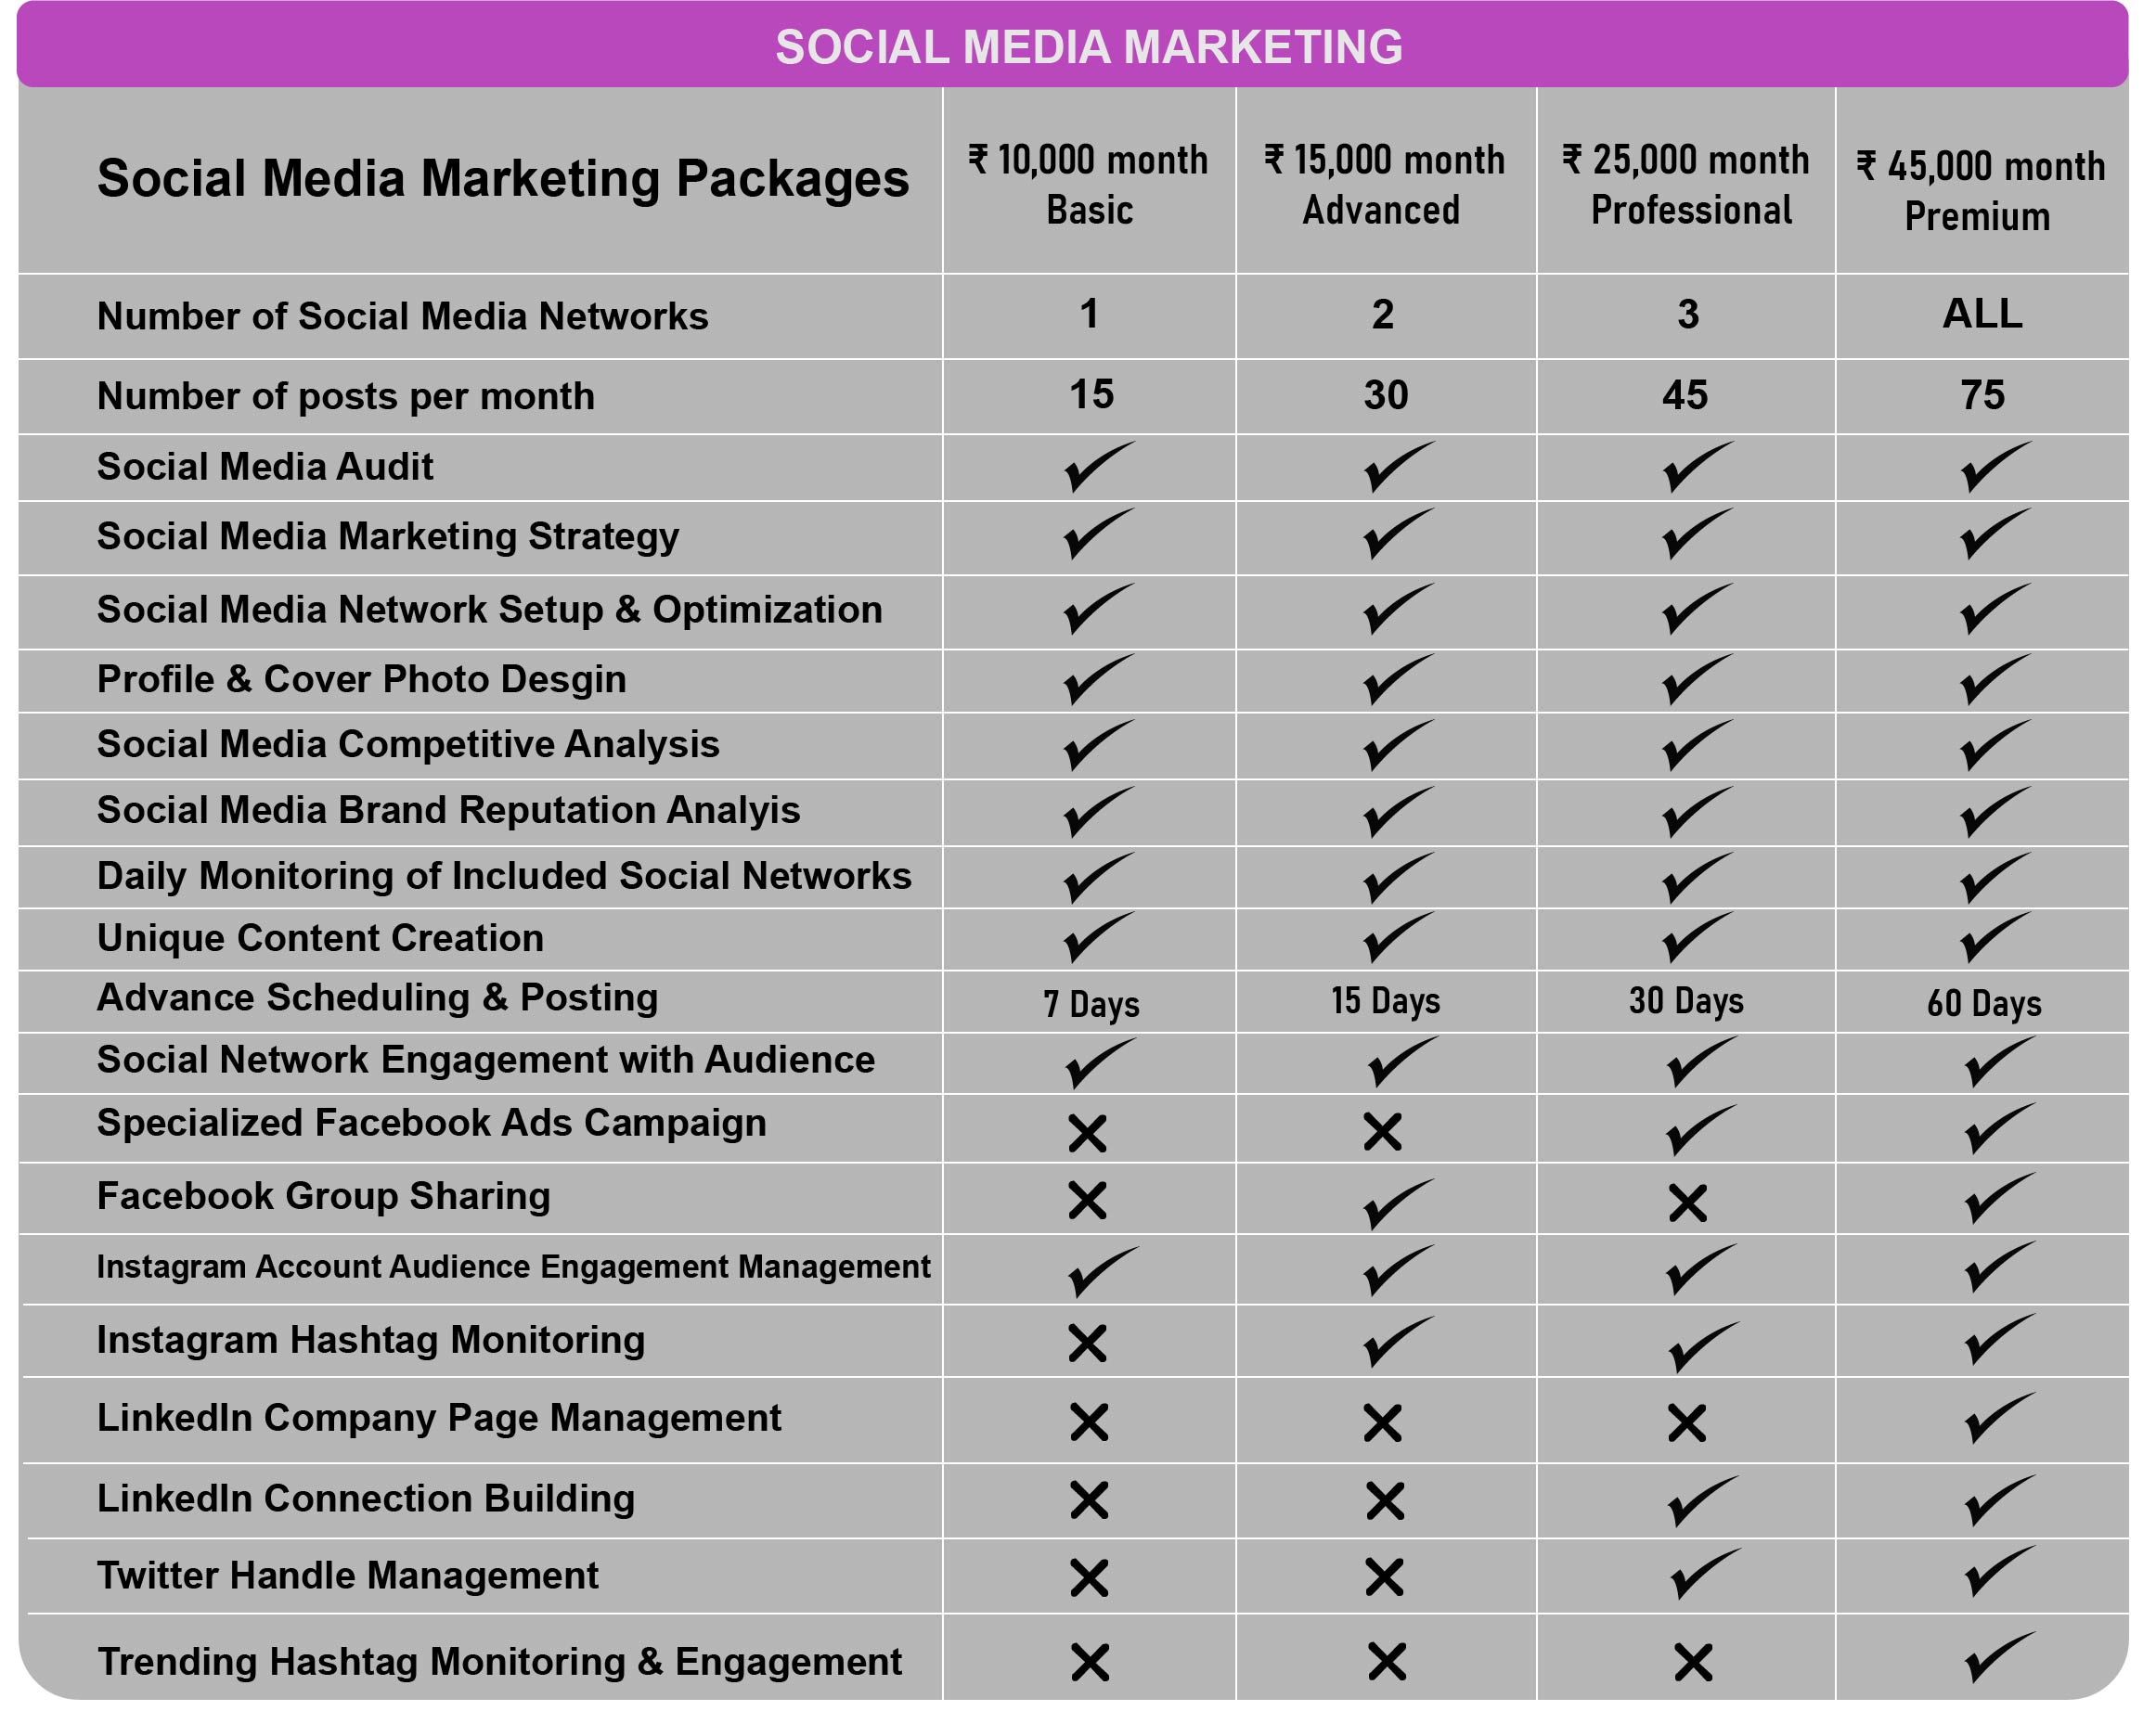 social media marketing packages